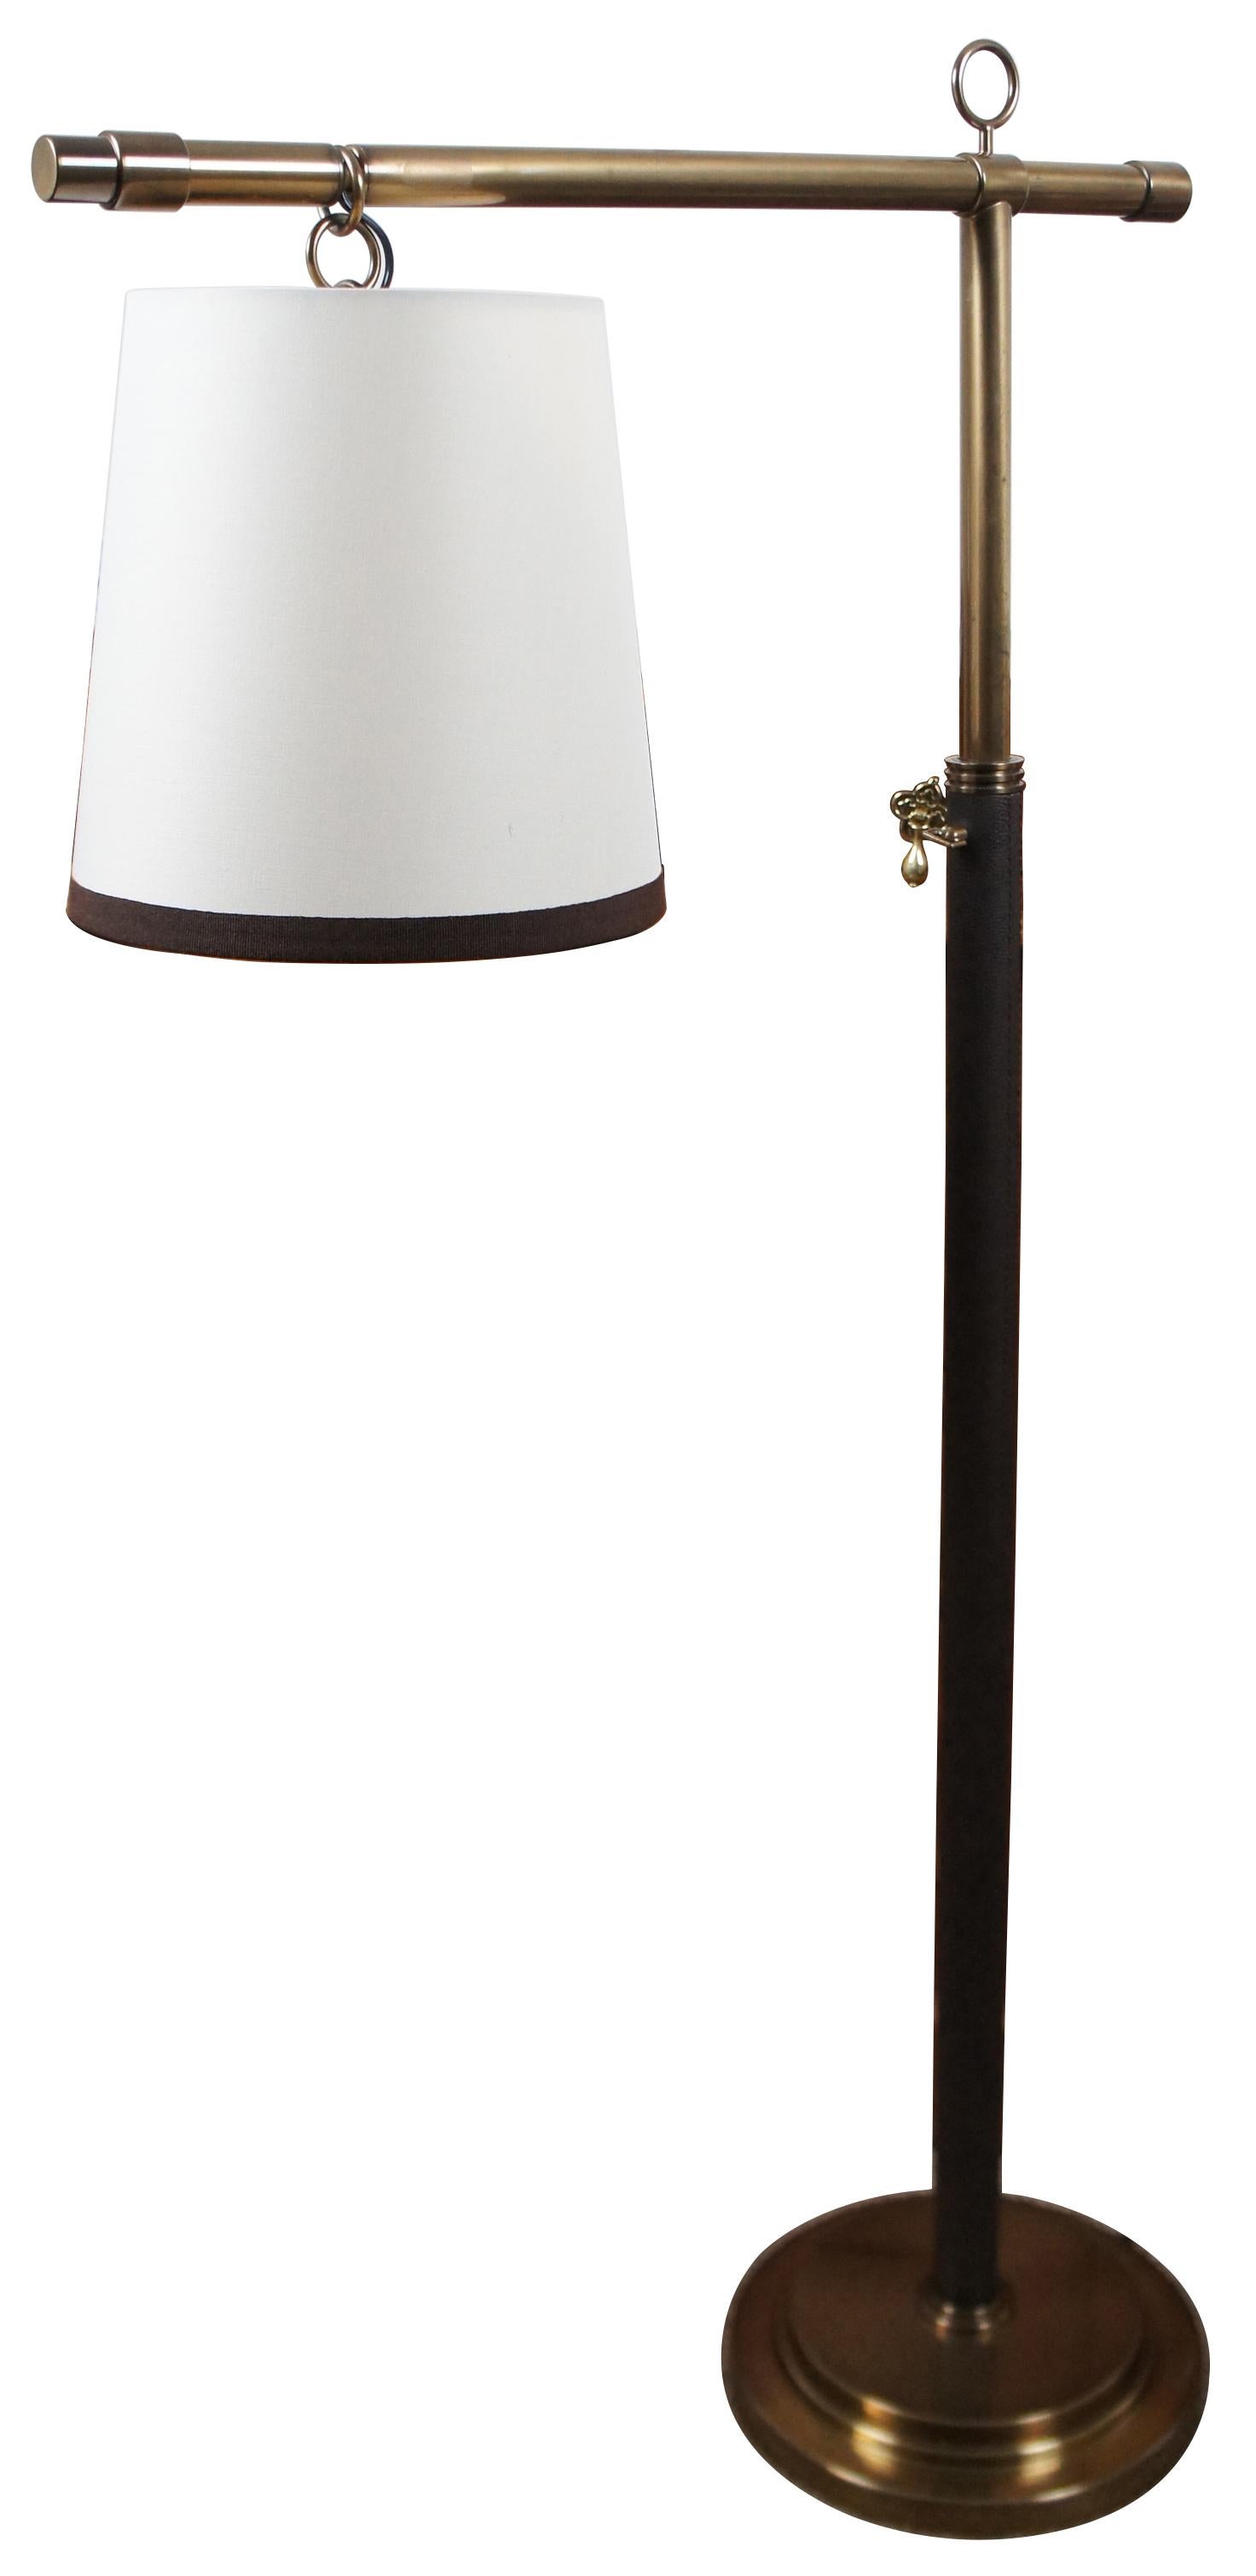 Baker Furniture Peony Floor Lamp Laura Kirar LK131 Brass Leather Adjustable 5